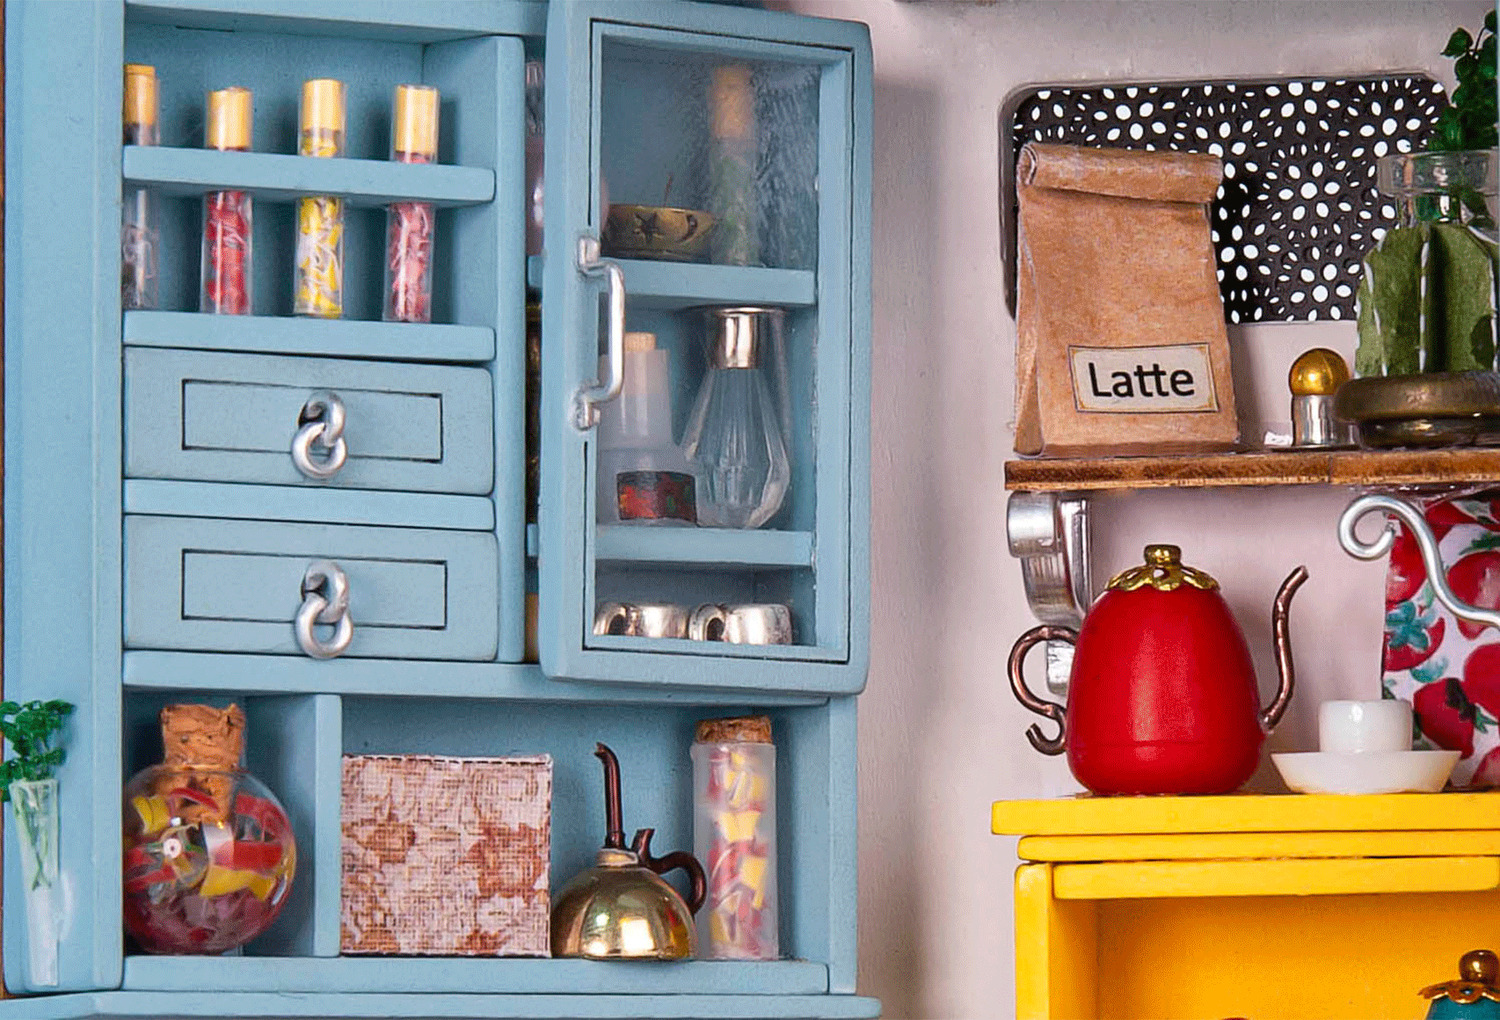 DIY Miniature House Kit - Joy's Living Room